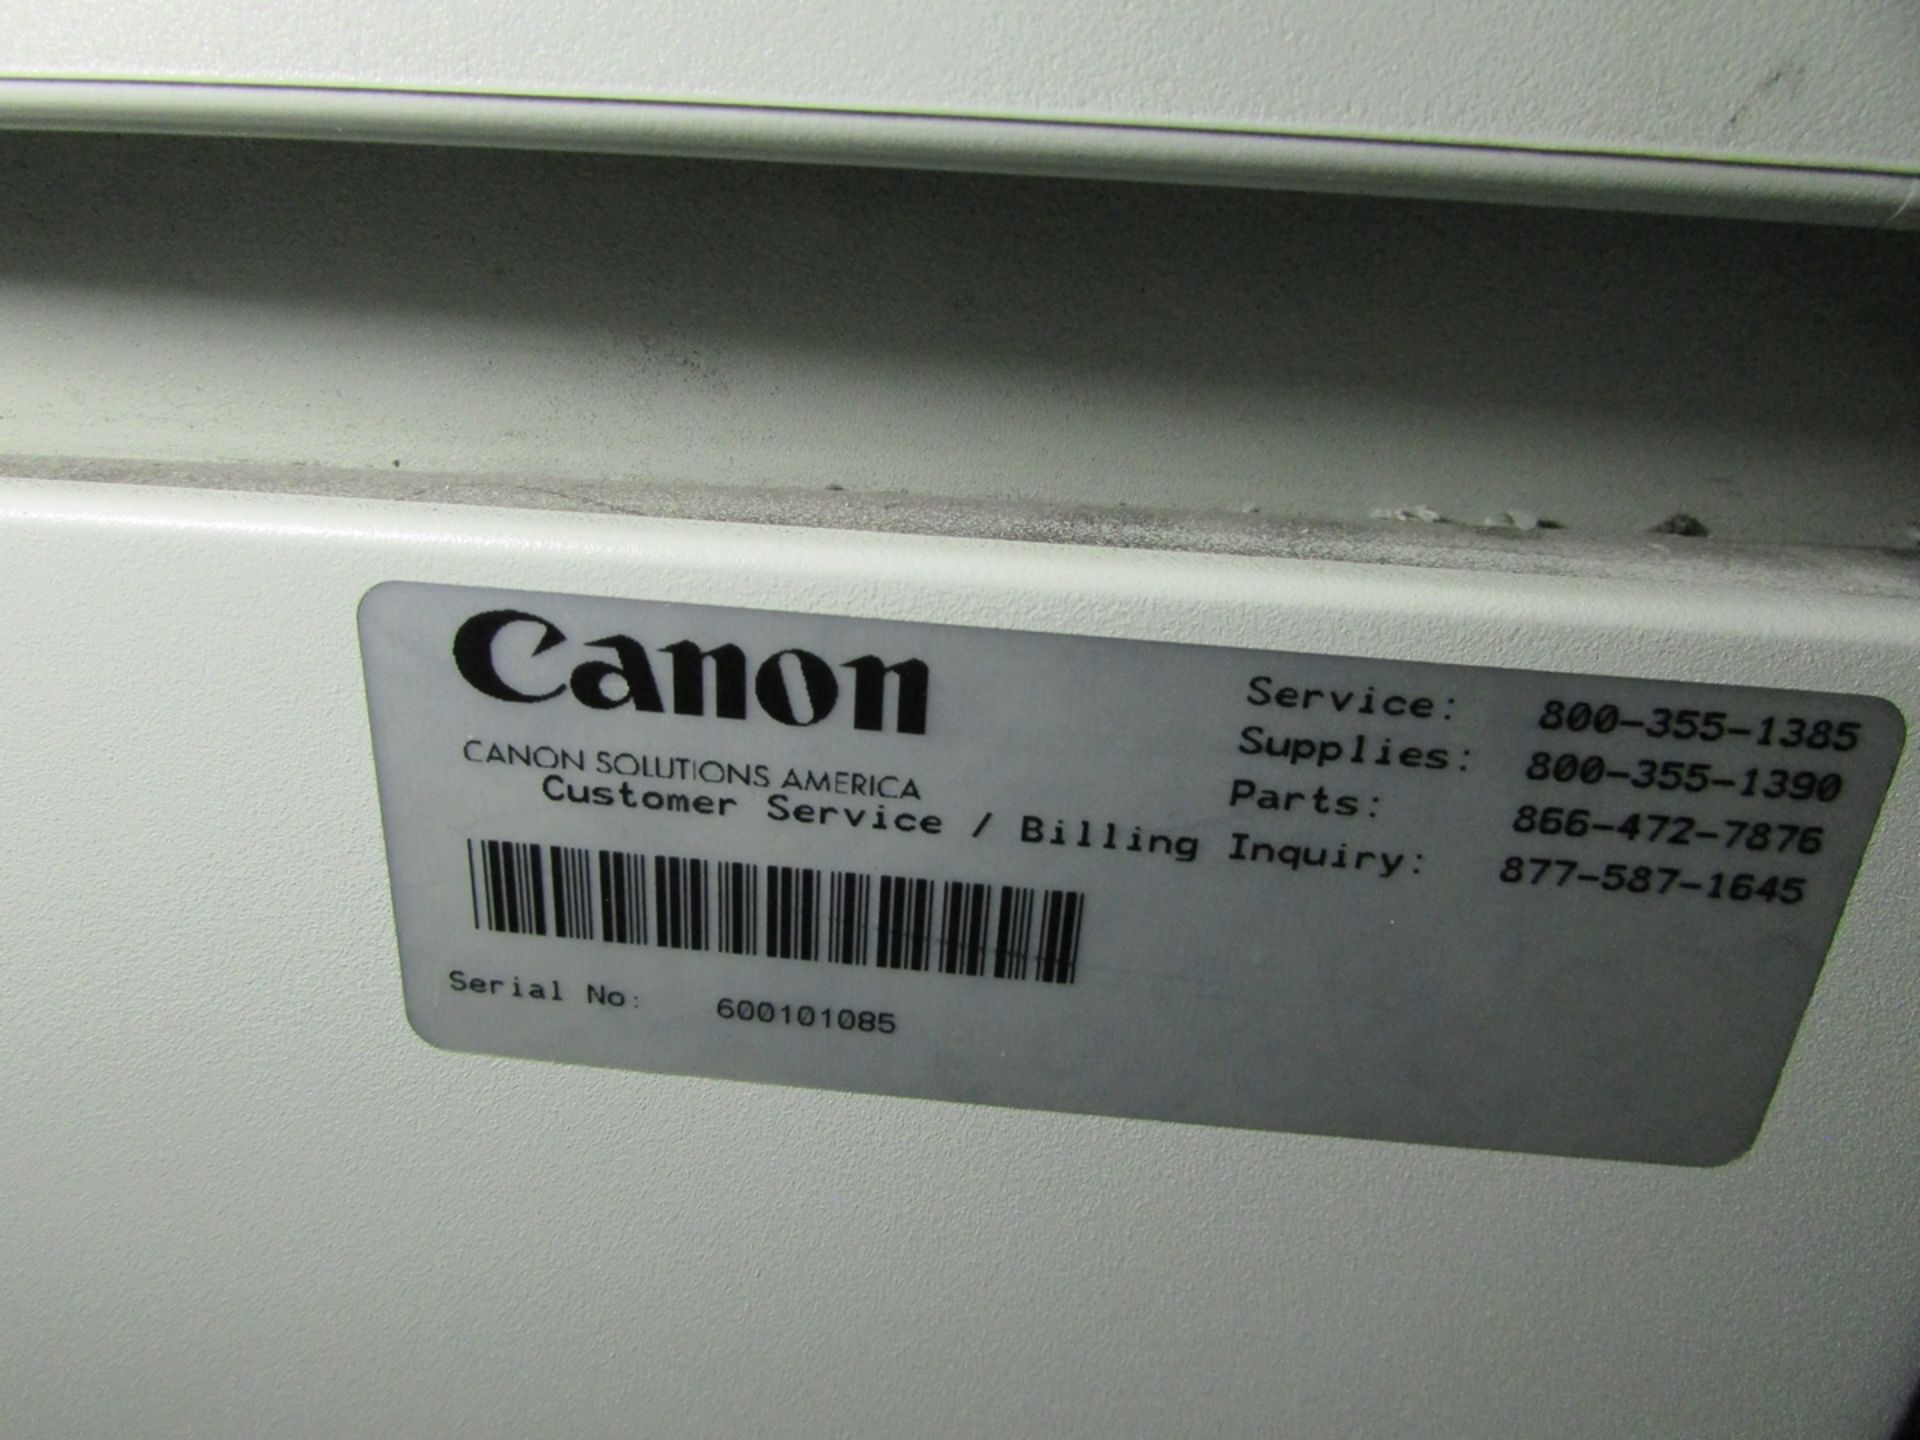 Cannon OCE VarioPrint 6250 Digital B/W Print System - Image 10 of 20